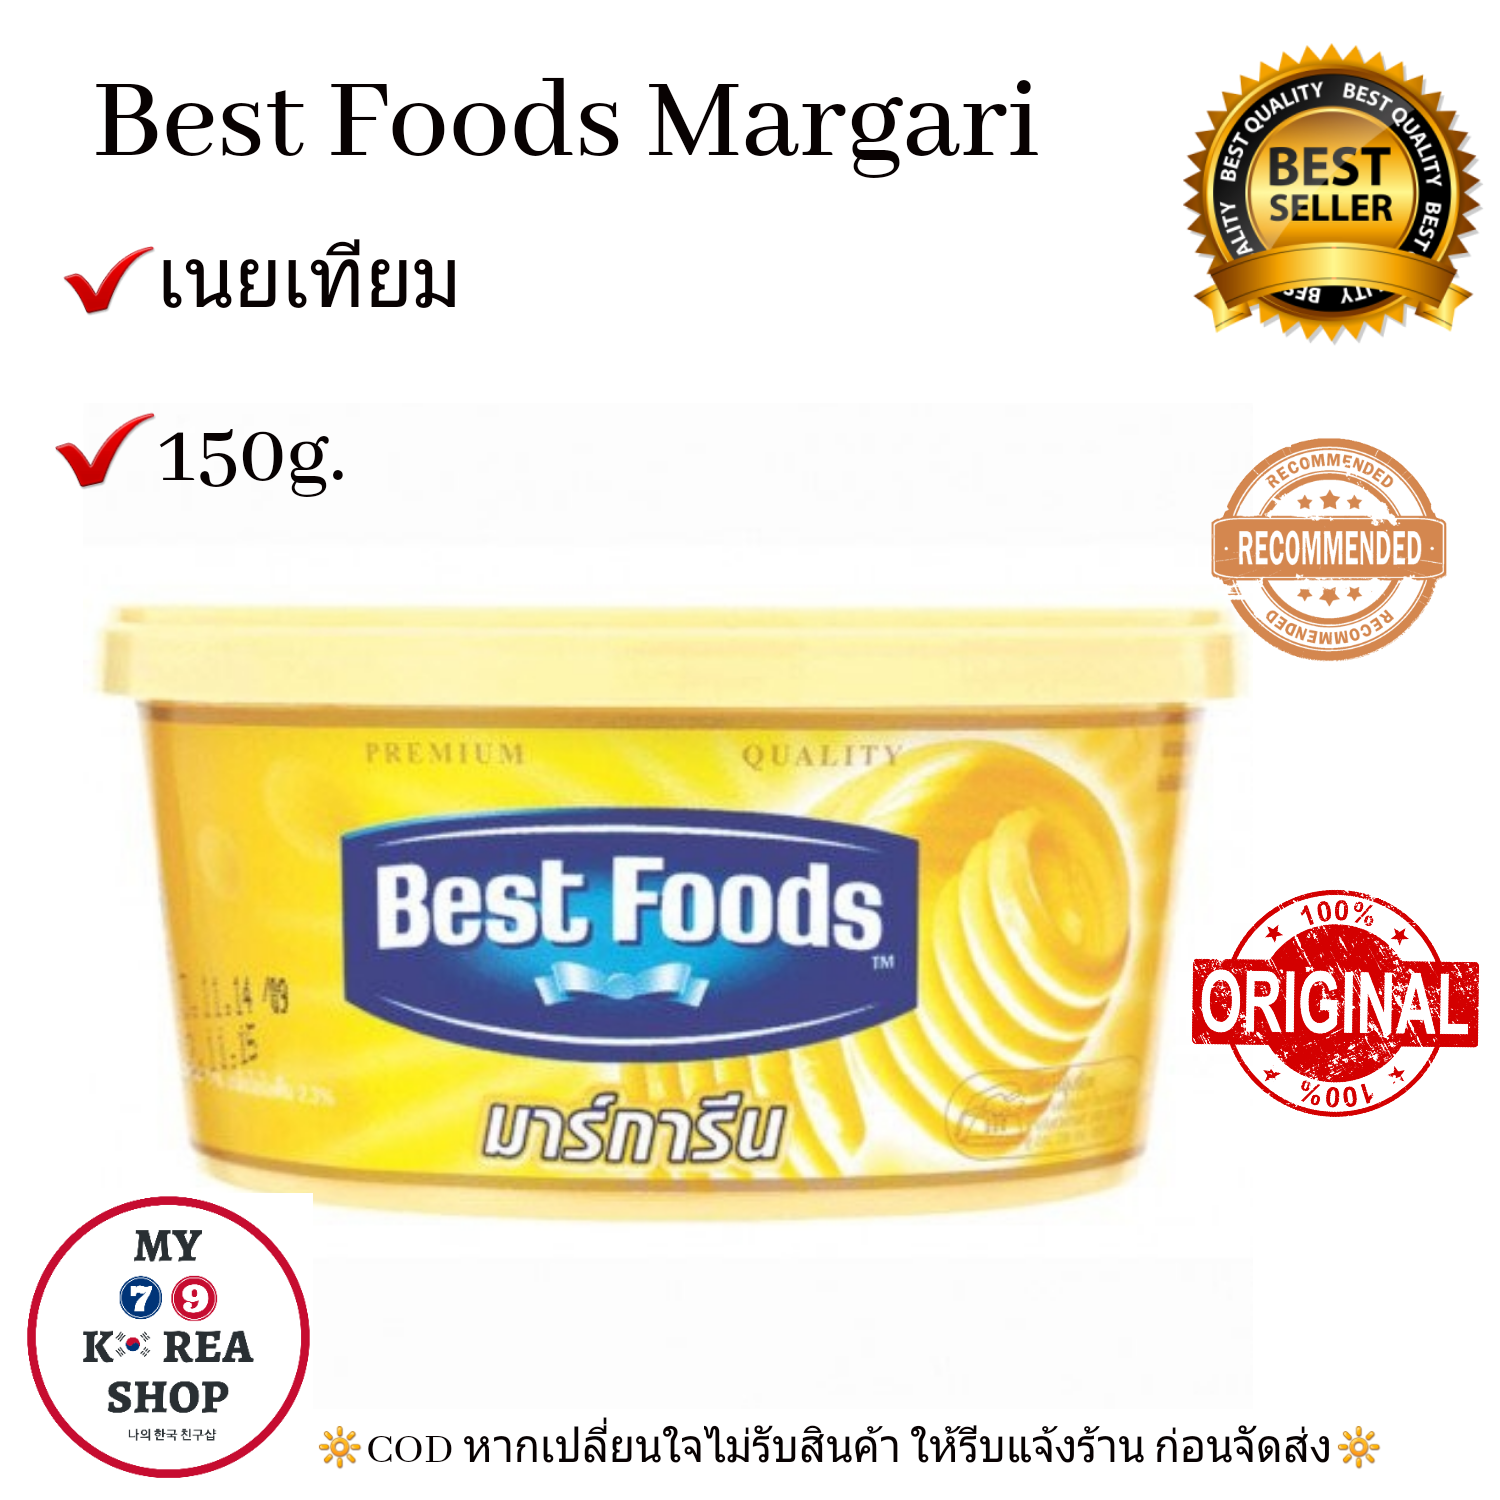 Best Food Margarine 150g. เบสฟู้ดส์ มาการีน ทาขนมปัง อร่อยฟิน